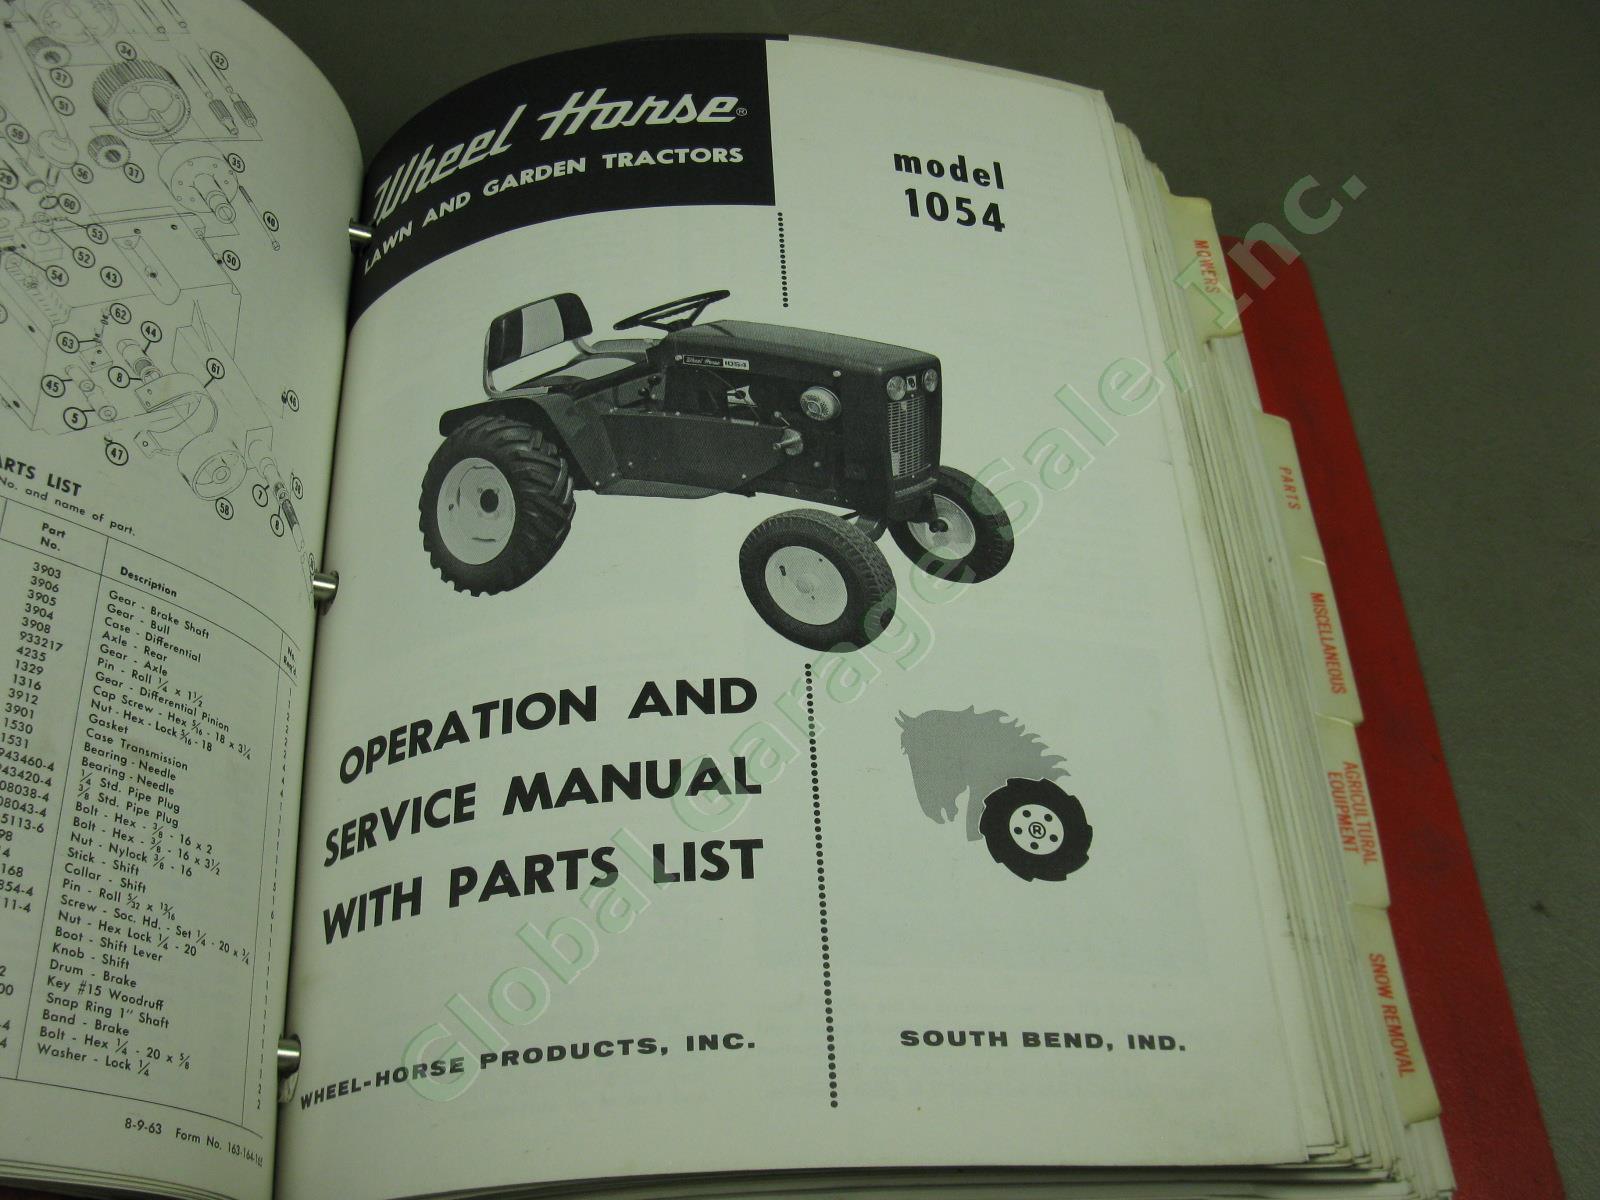 Vtg Wheel Horse Maintenance Manual Part List Lot Tractor Riding Mower 9